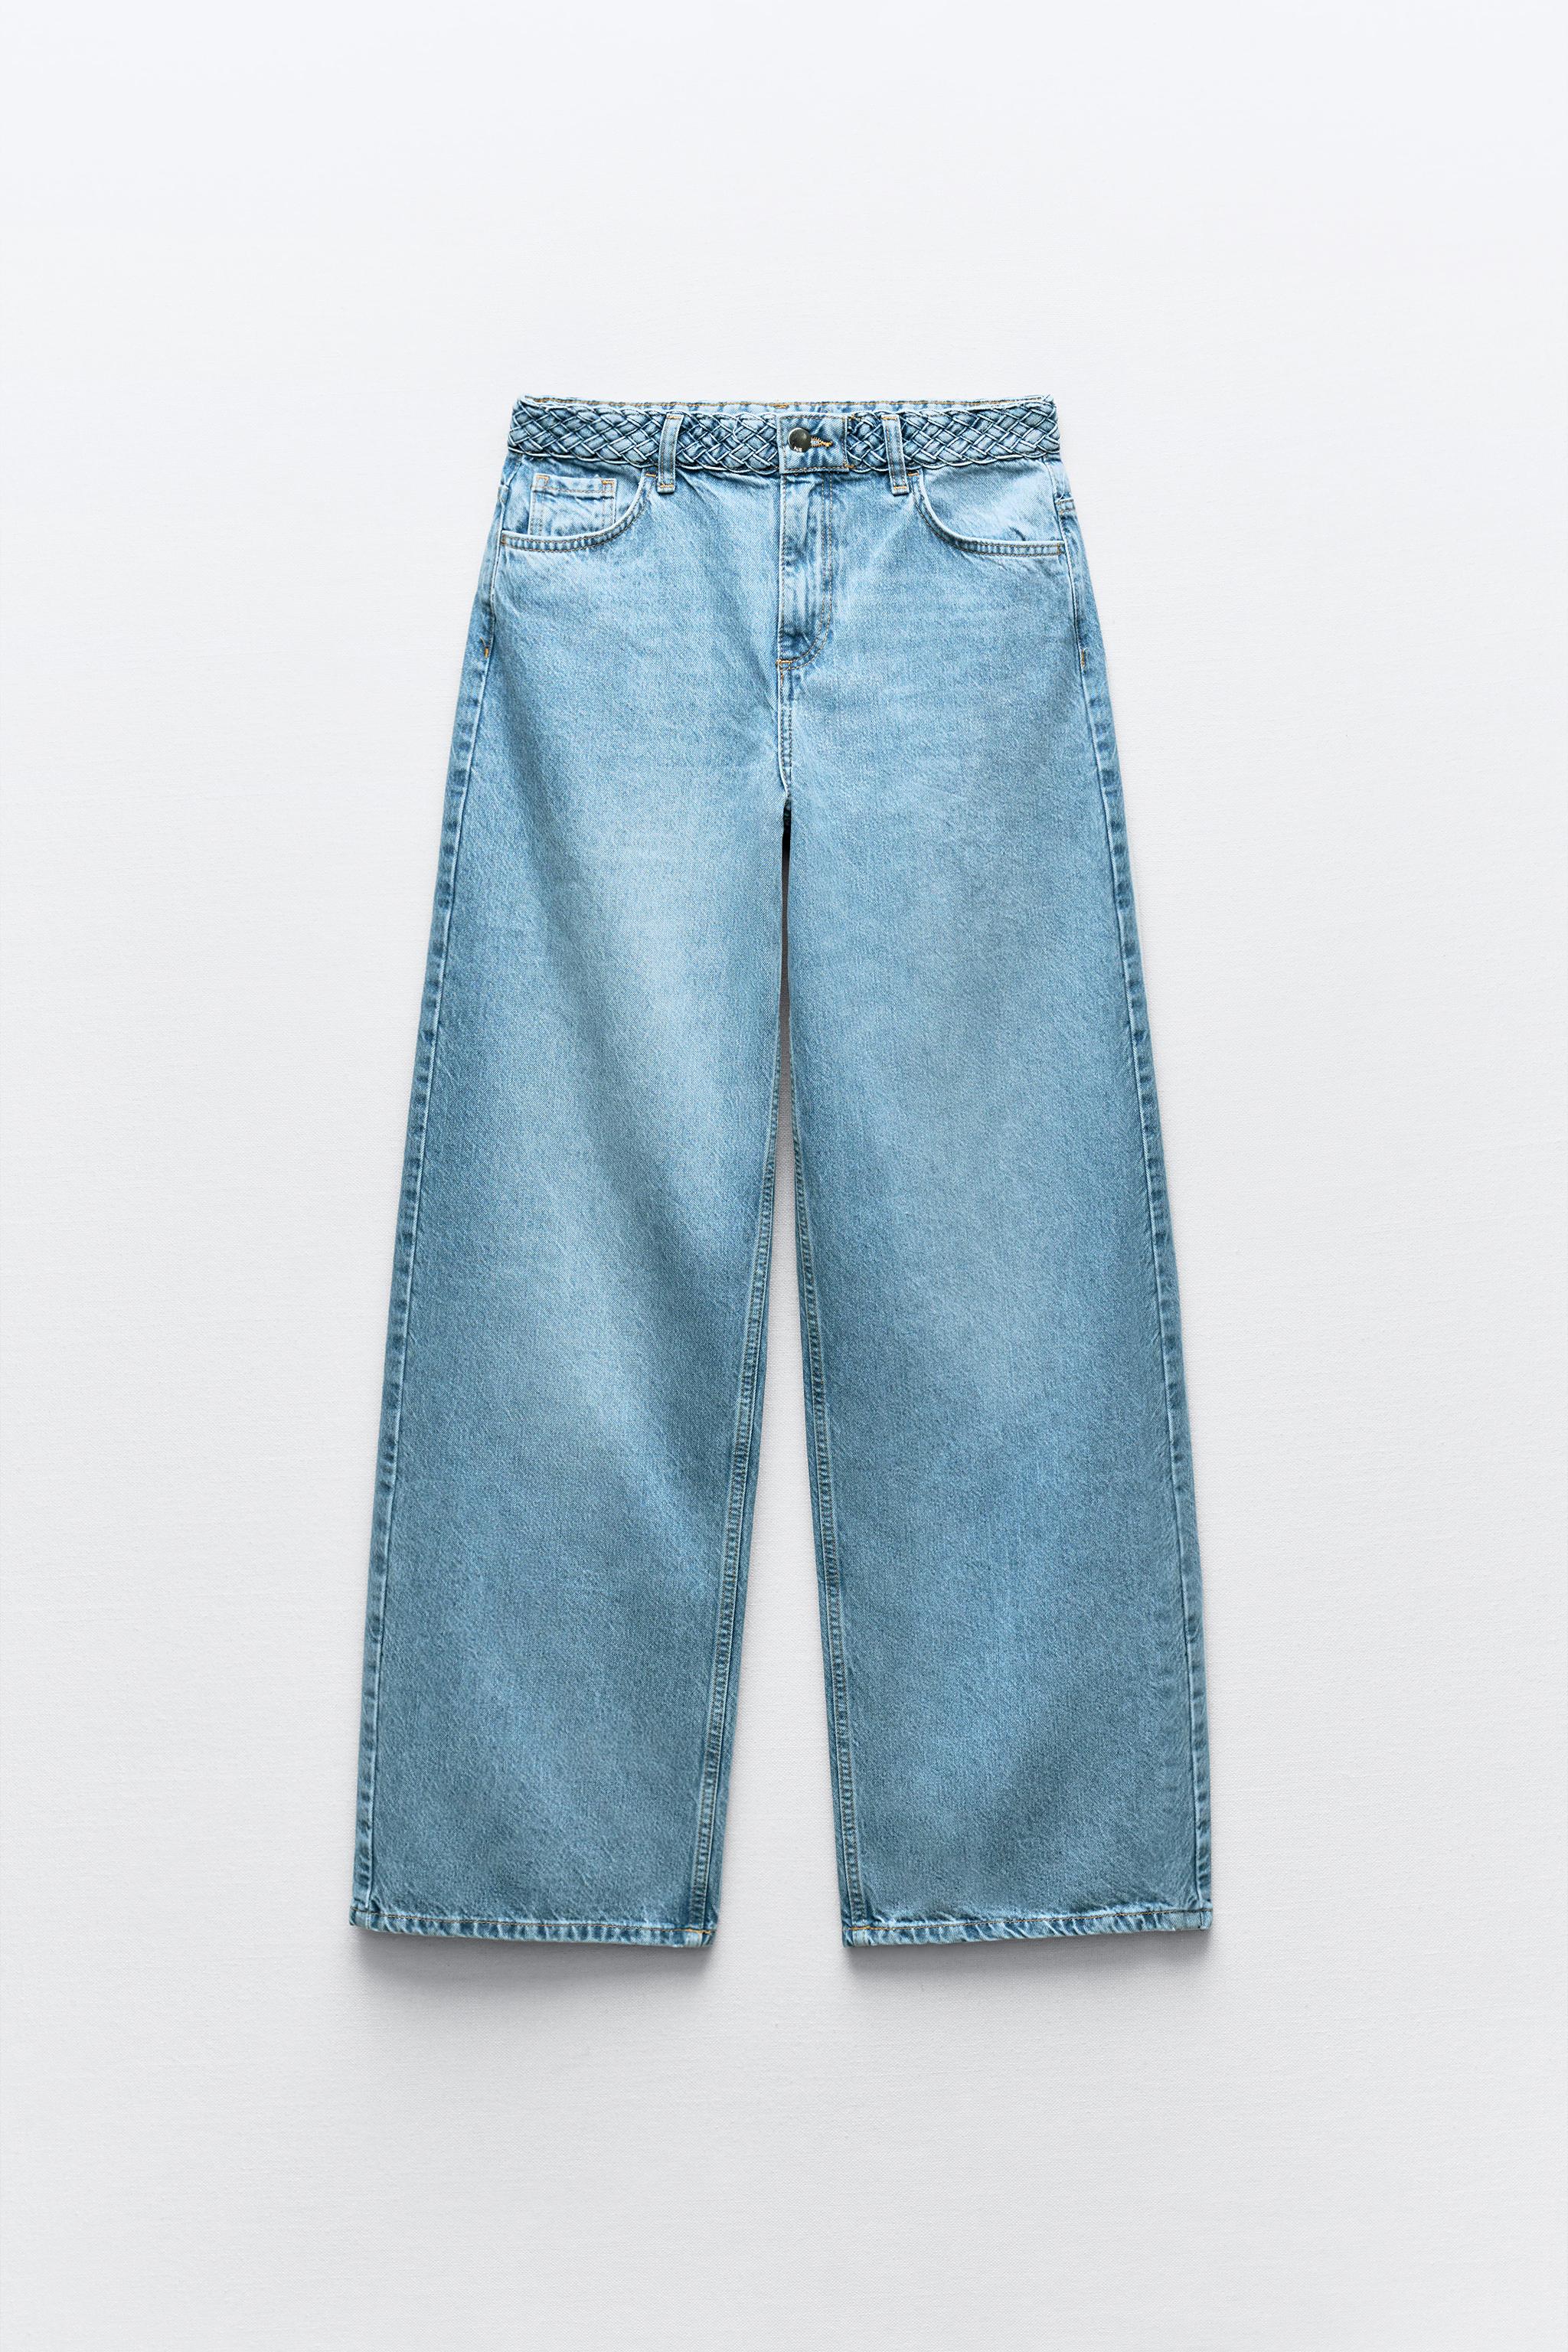 Z1975 WIDE-LEG 高腰編織腰身牛仔褲- 中藍色| ZARA Hong Kong SAR 